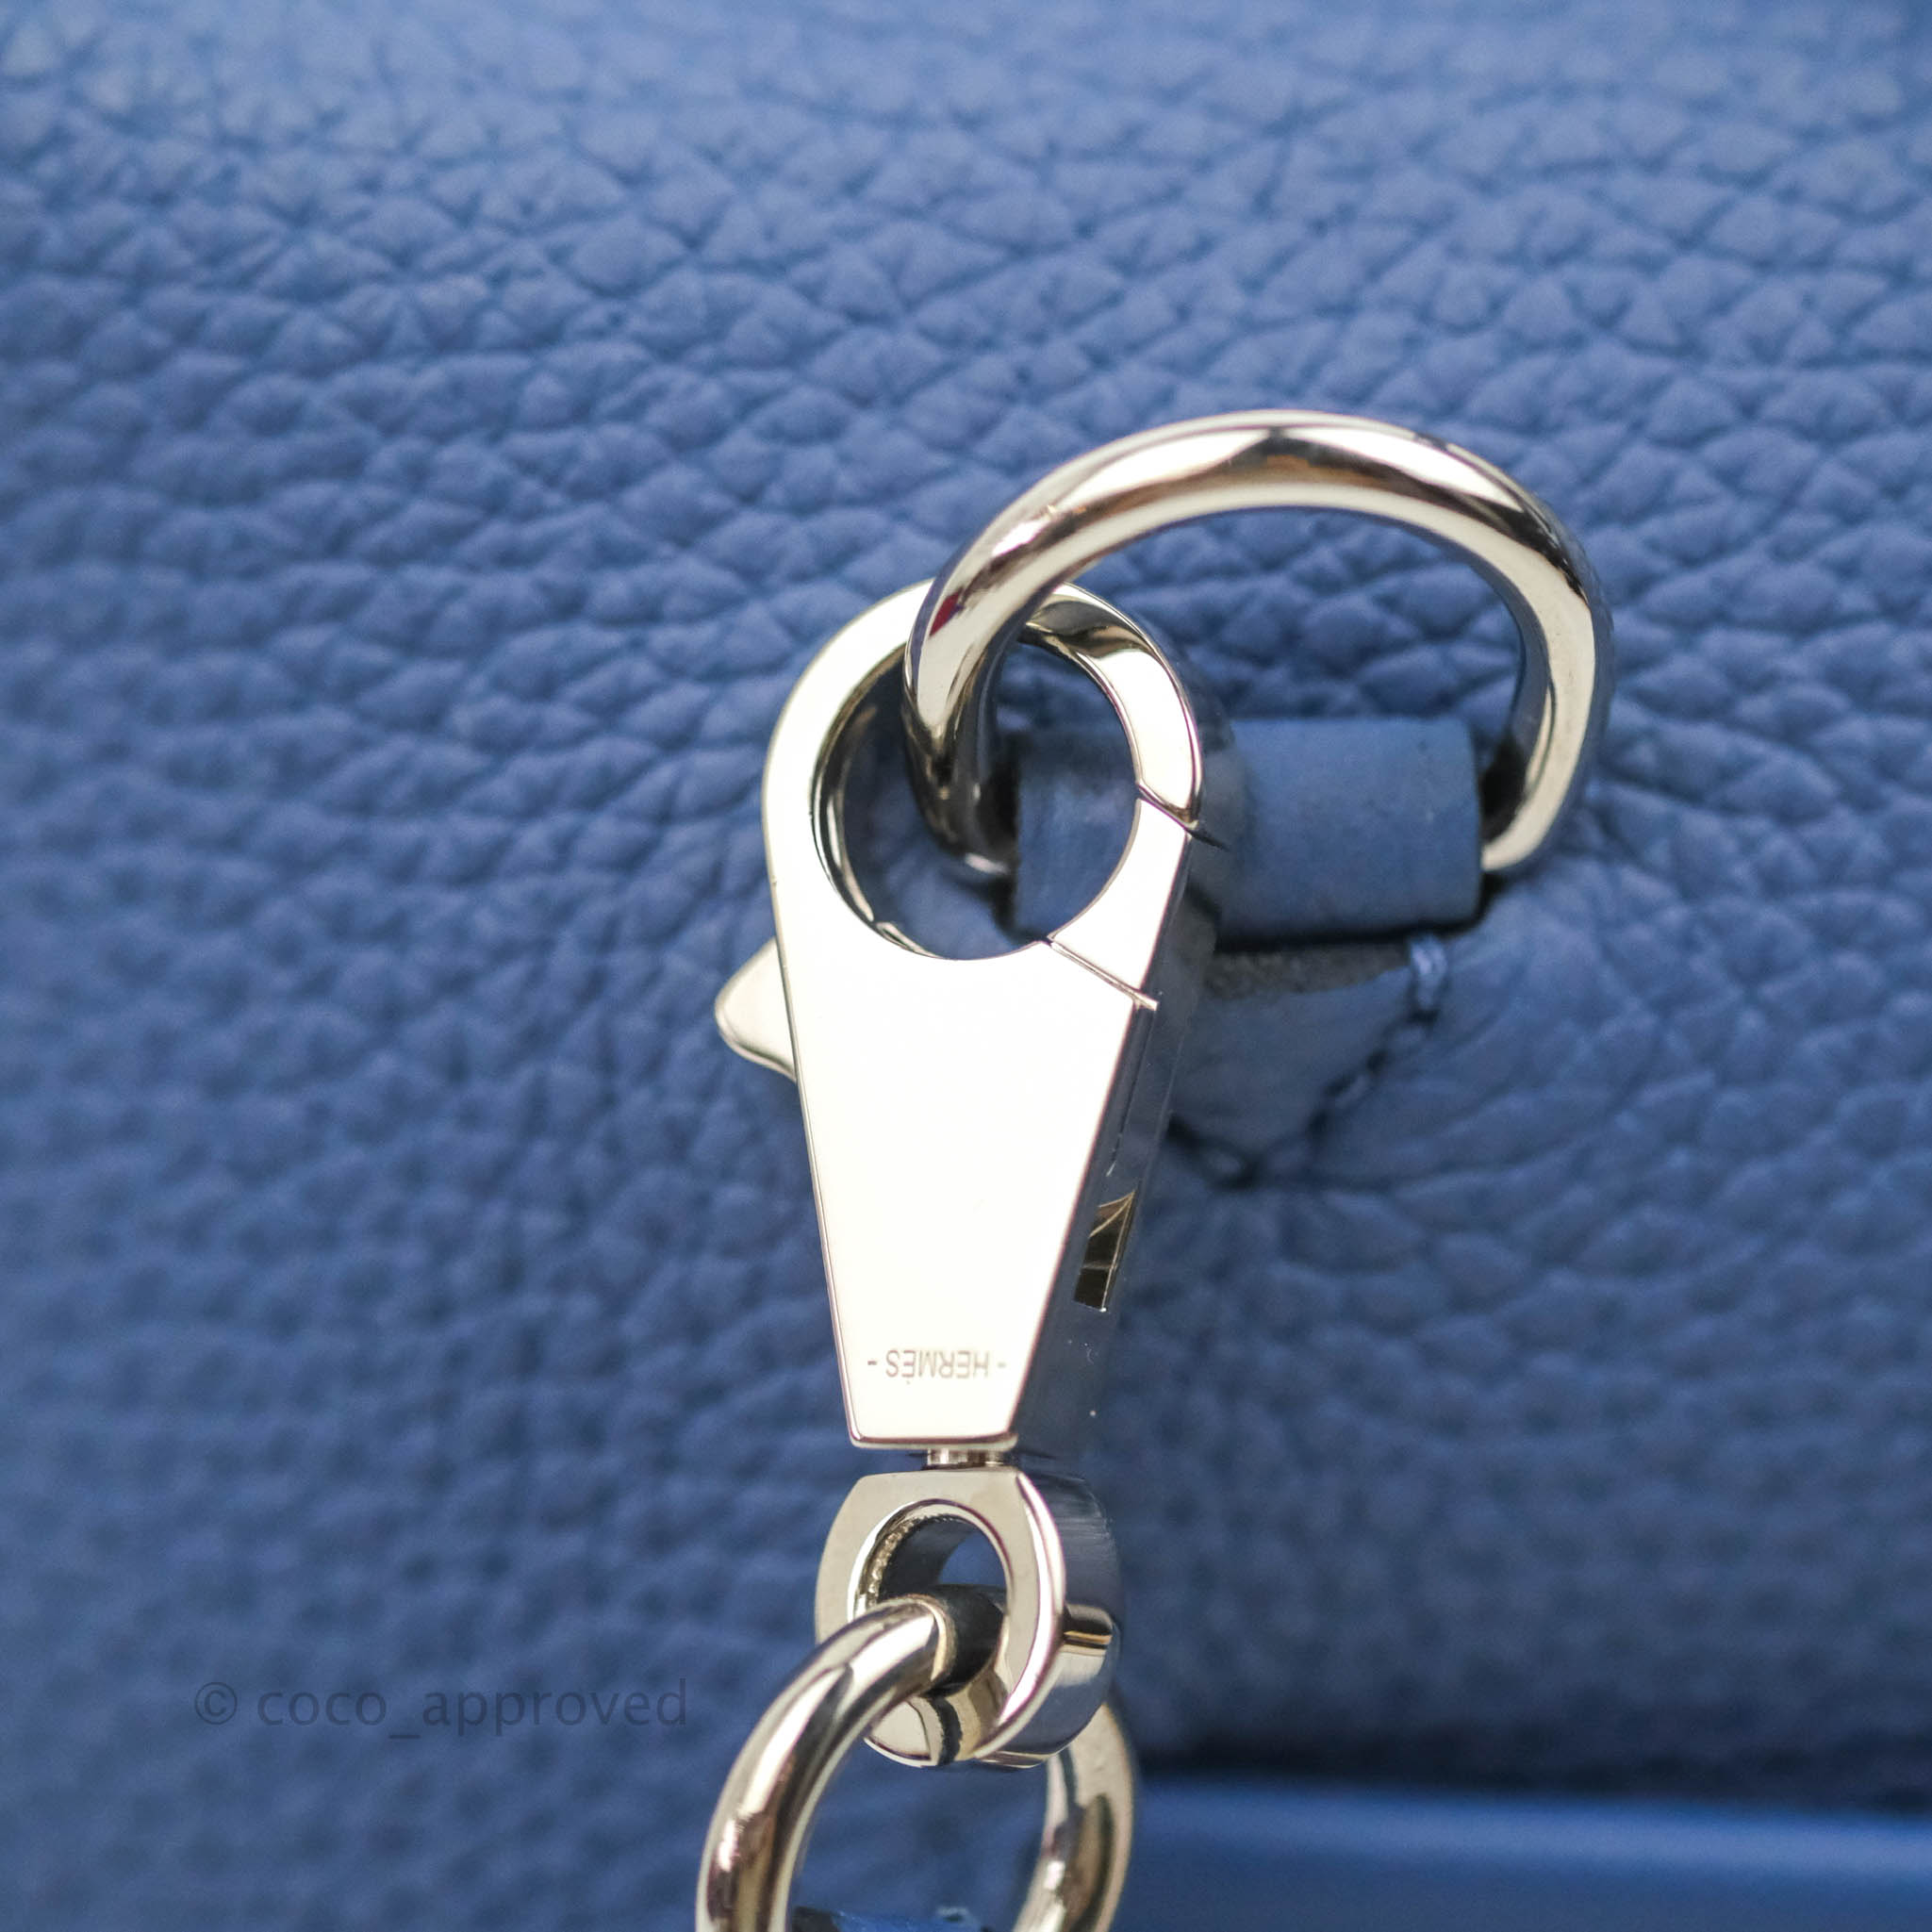 Hermes Bleu Brighton Togo/Swift Leather Bag